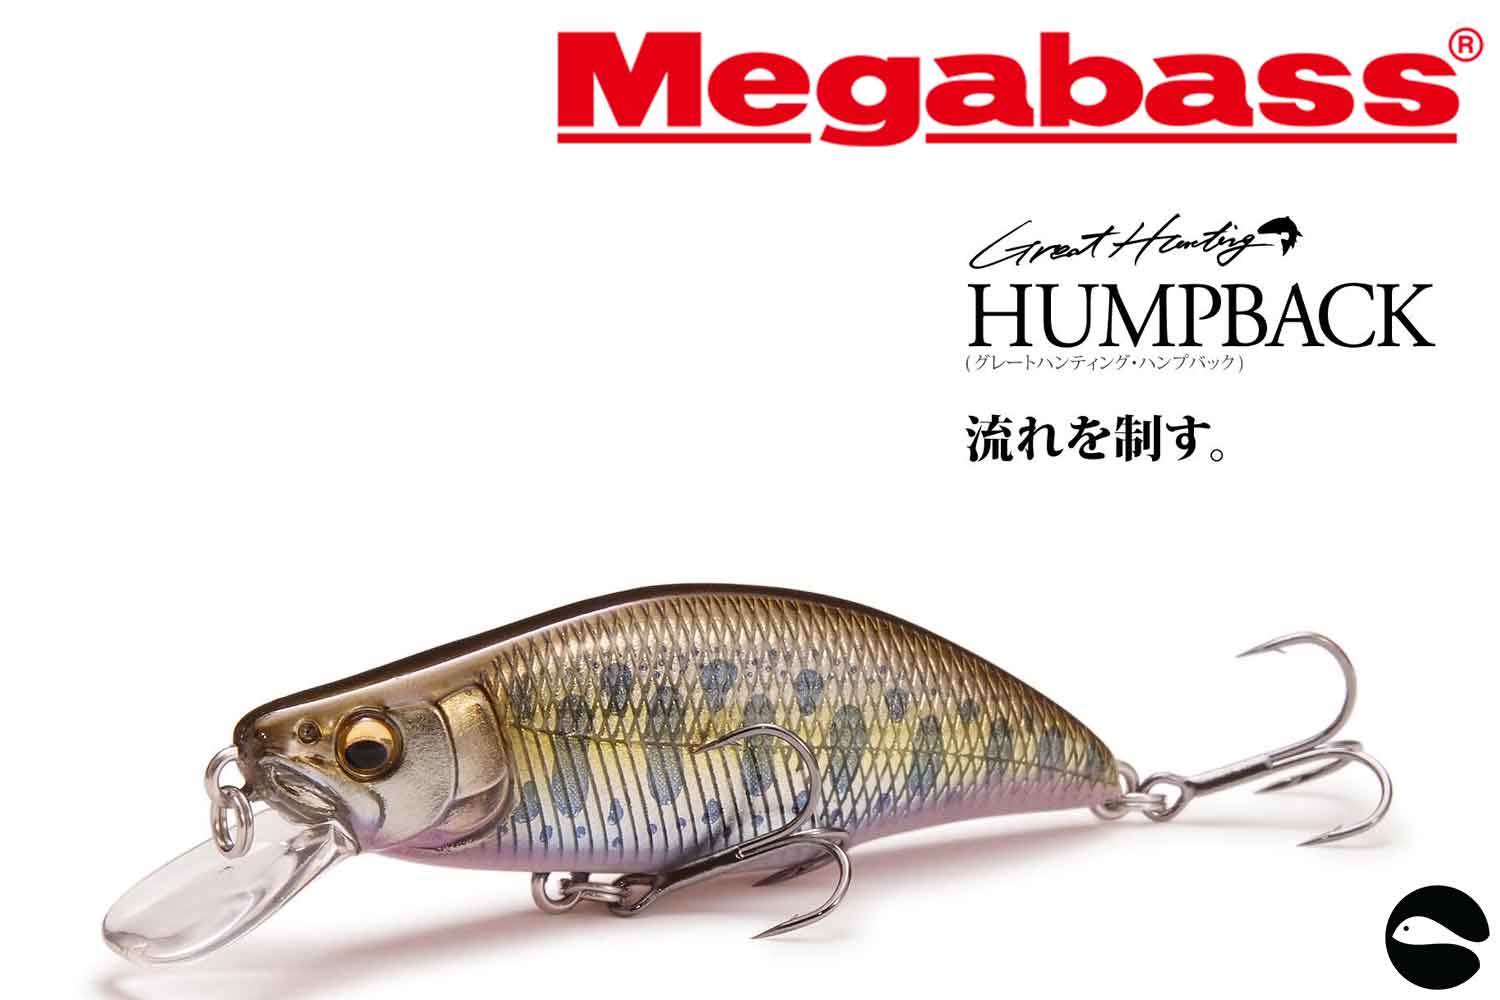 megabass great hunting humpback